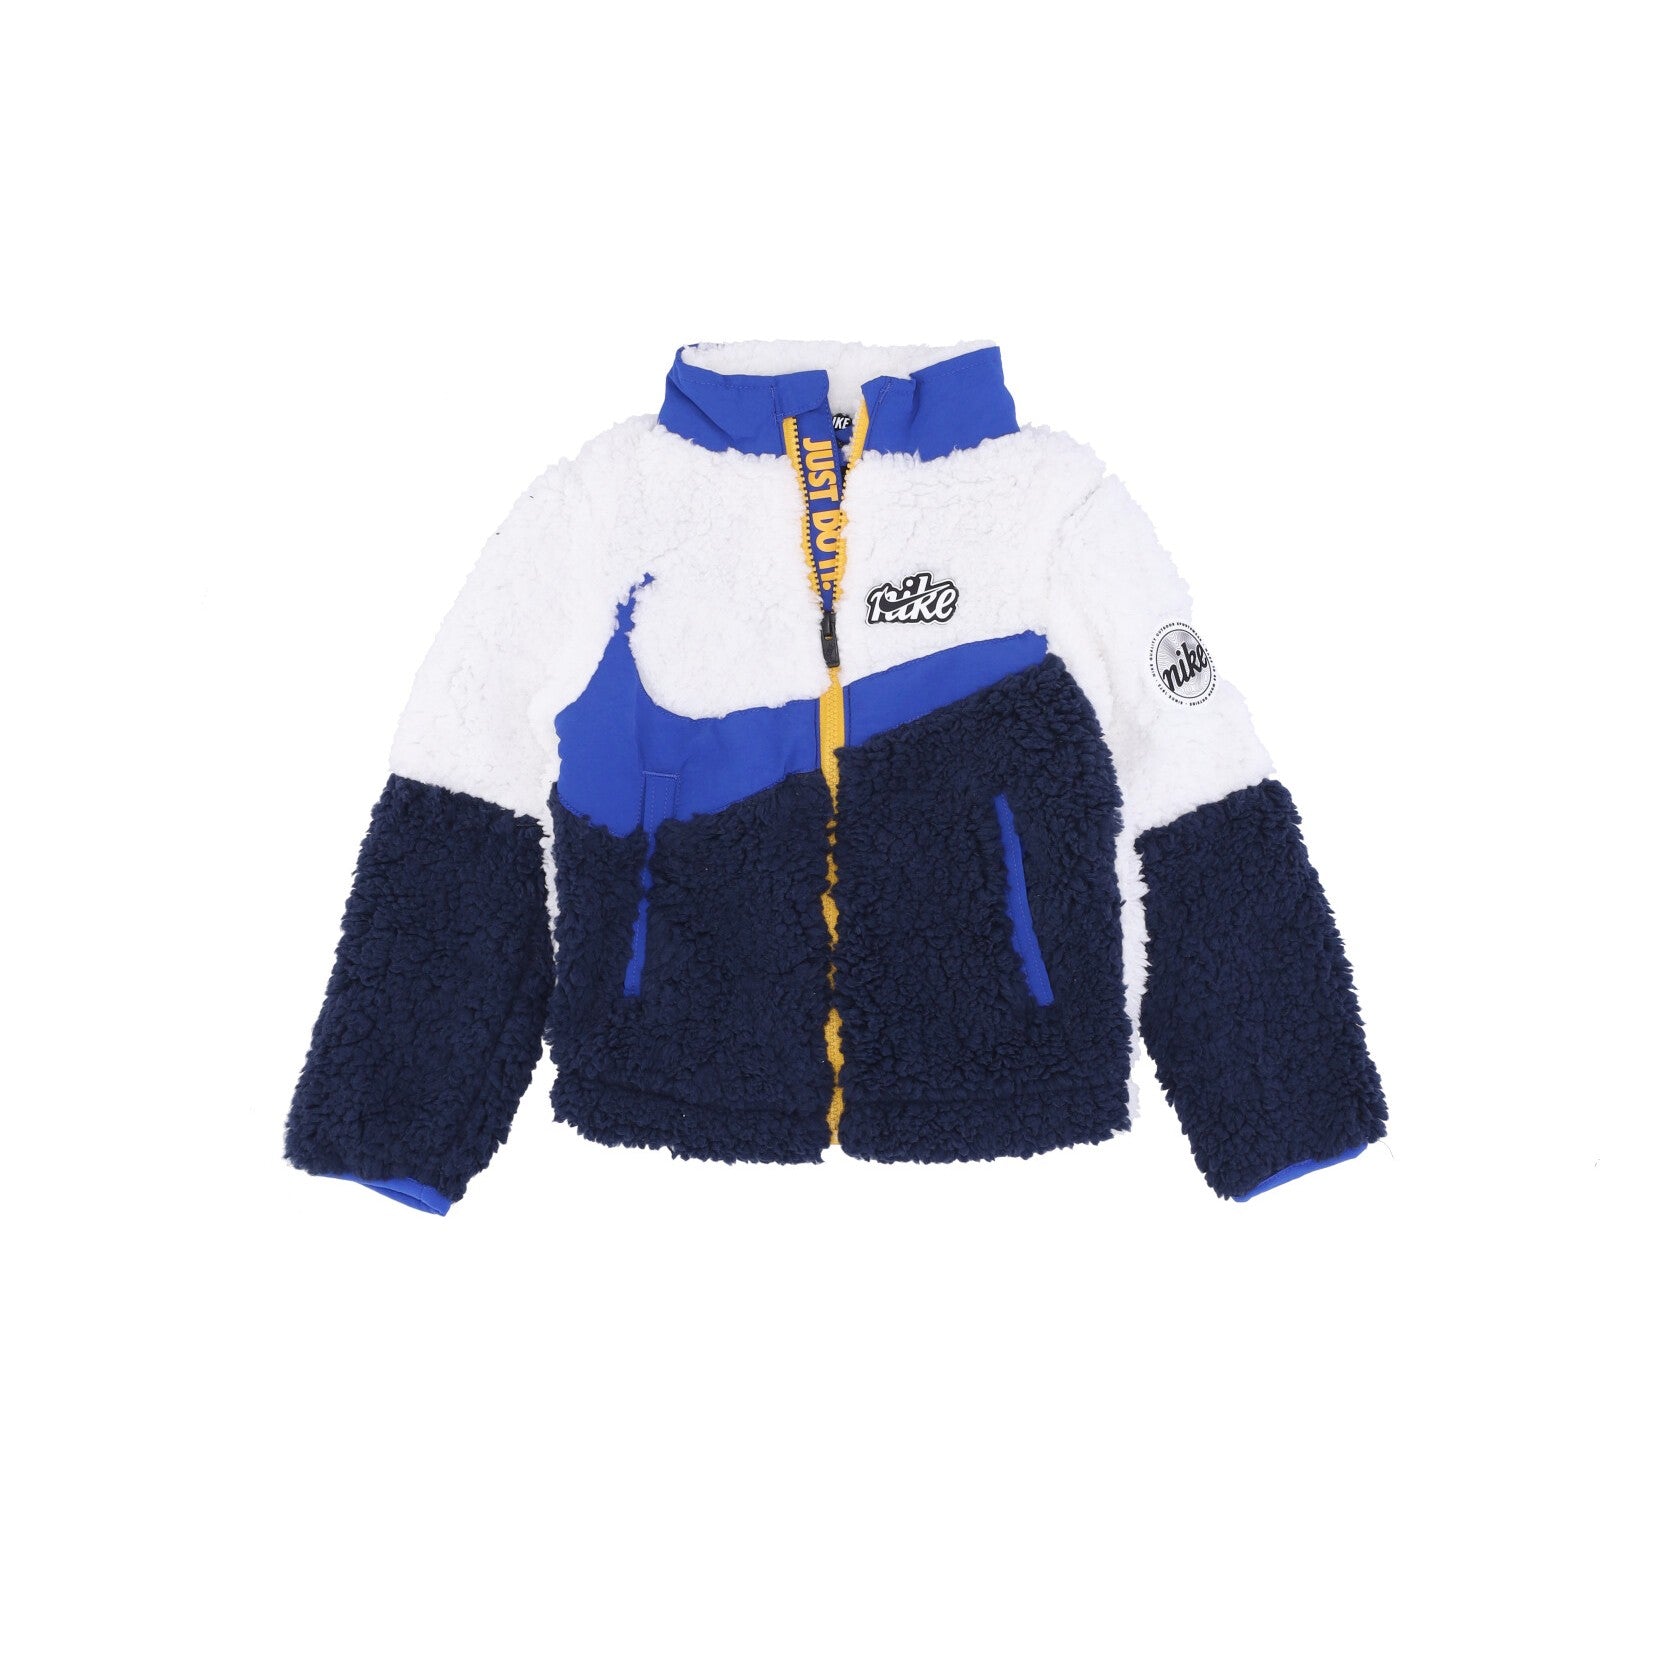 Nike, Orsetto Bambino Sherpa Jacket, Sail